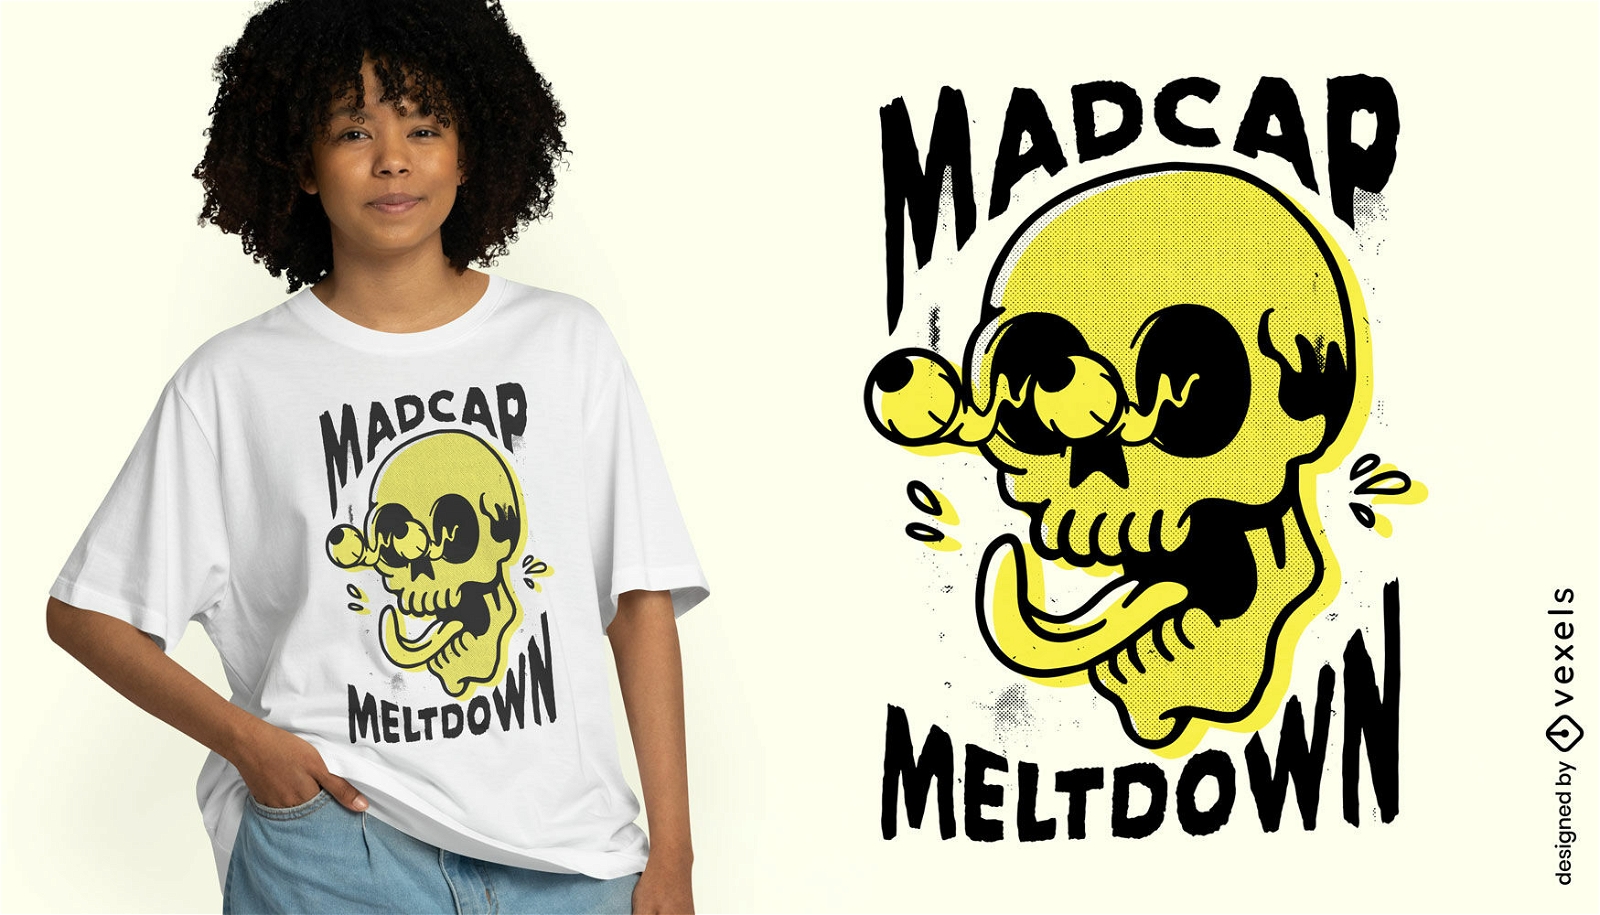 Diseño de camiseta de calavera Meldown Madcap